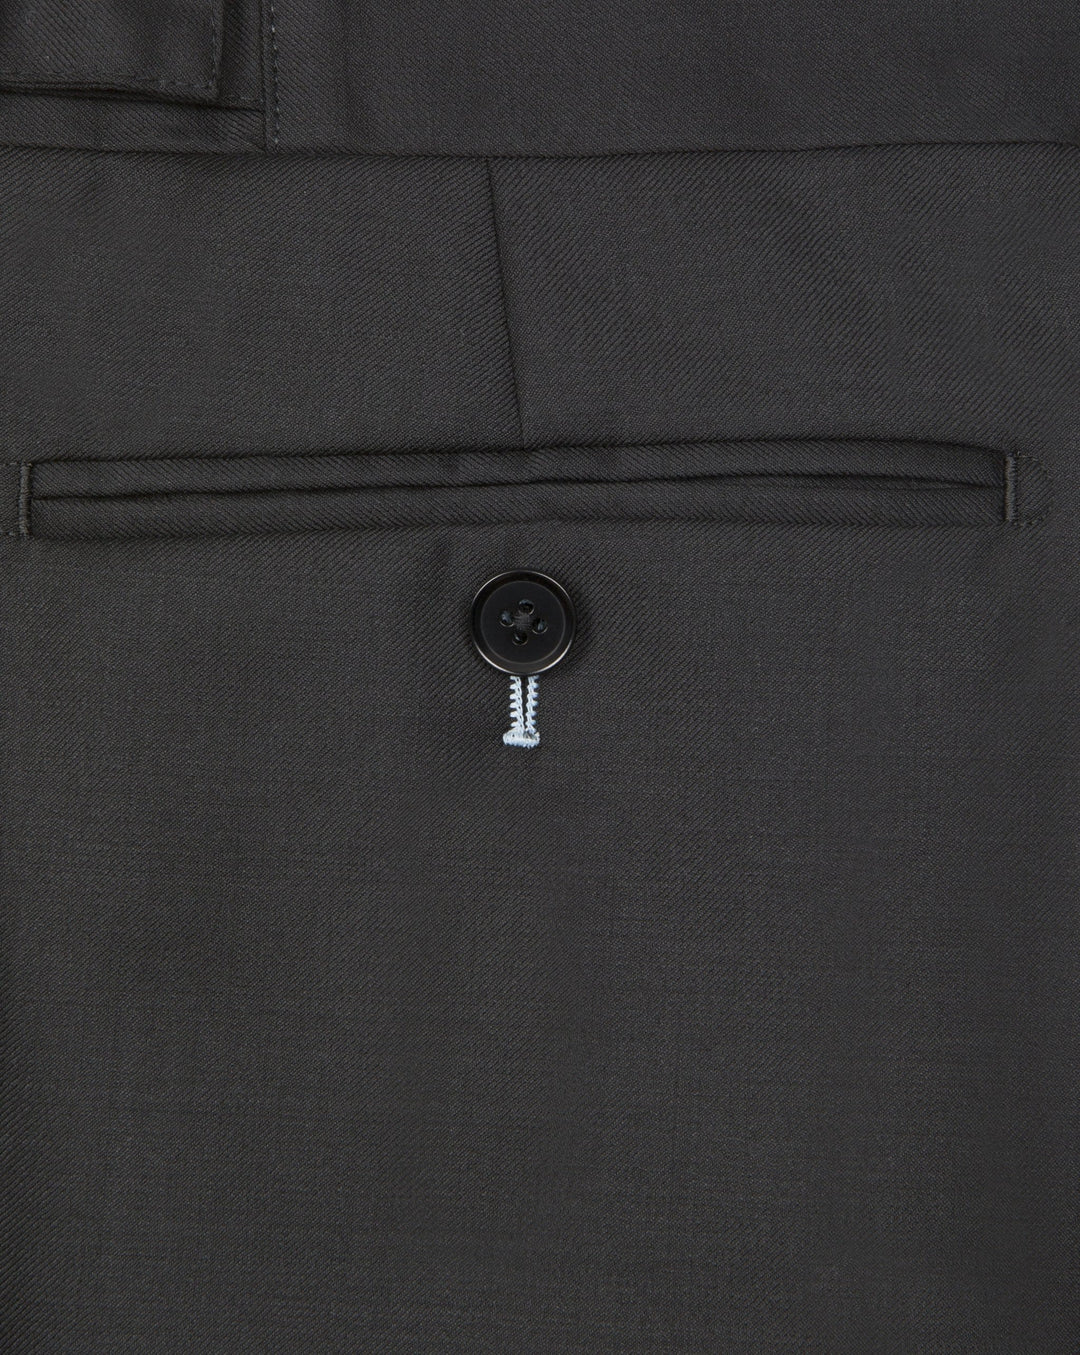 Plain Black Suit - Mark marengo